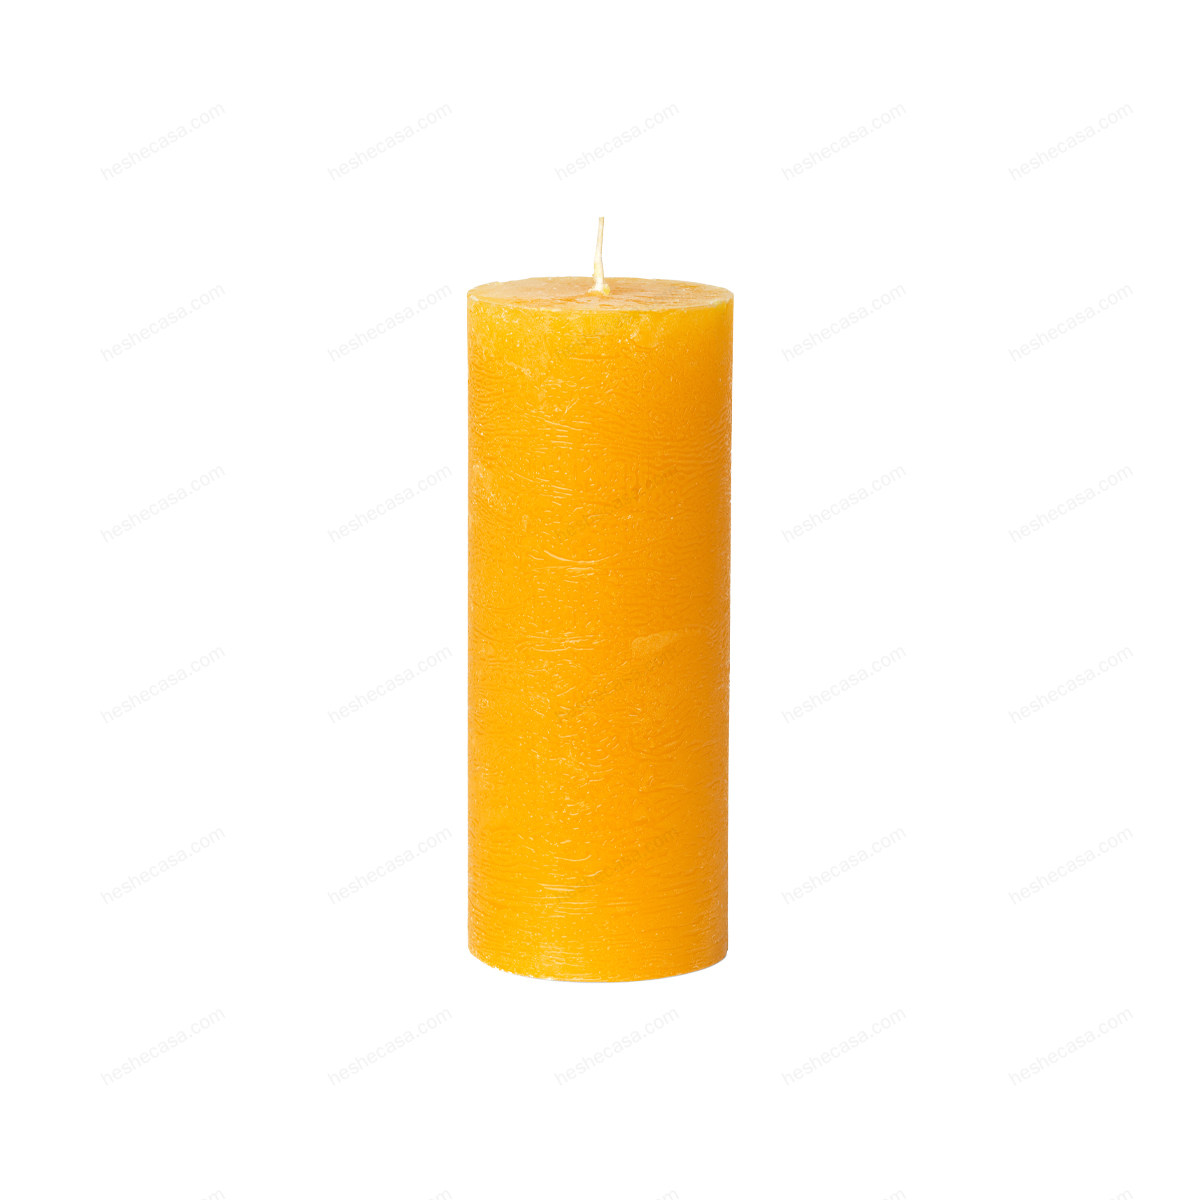 Candle香薰/蜡烛/烛台